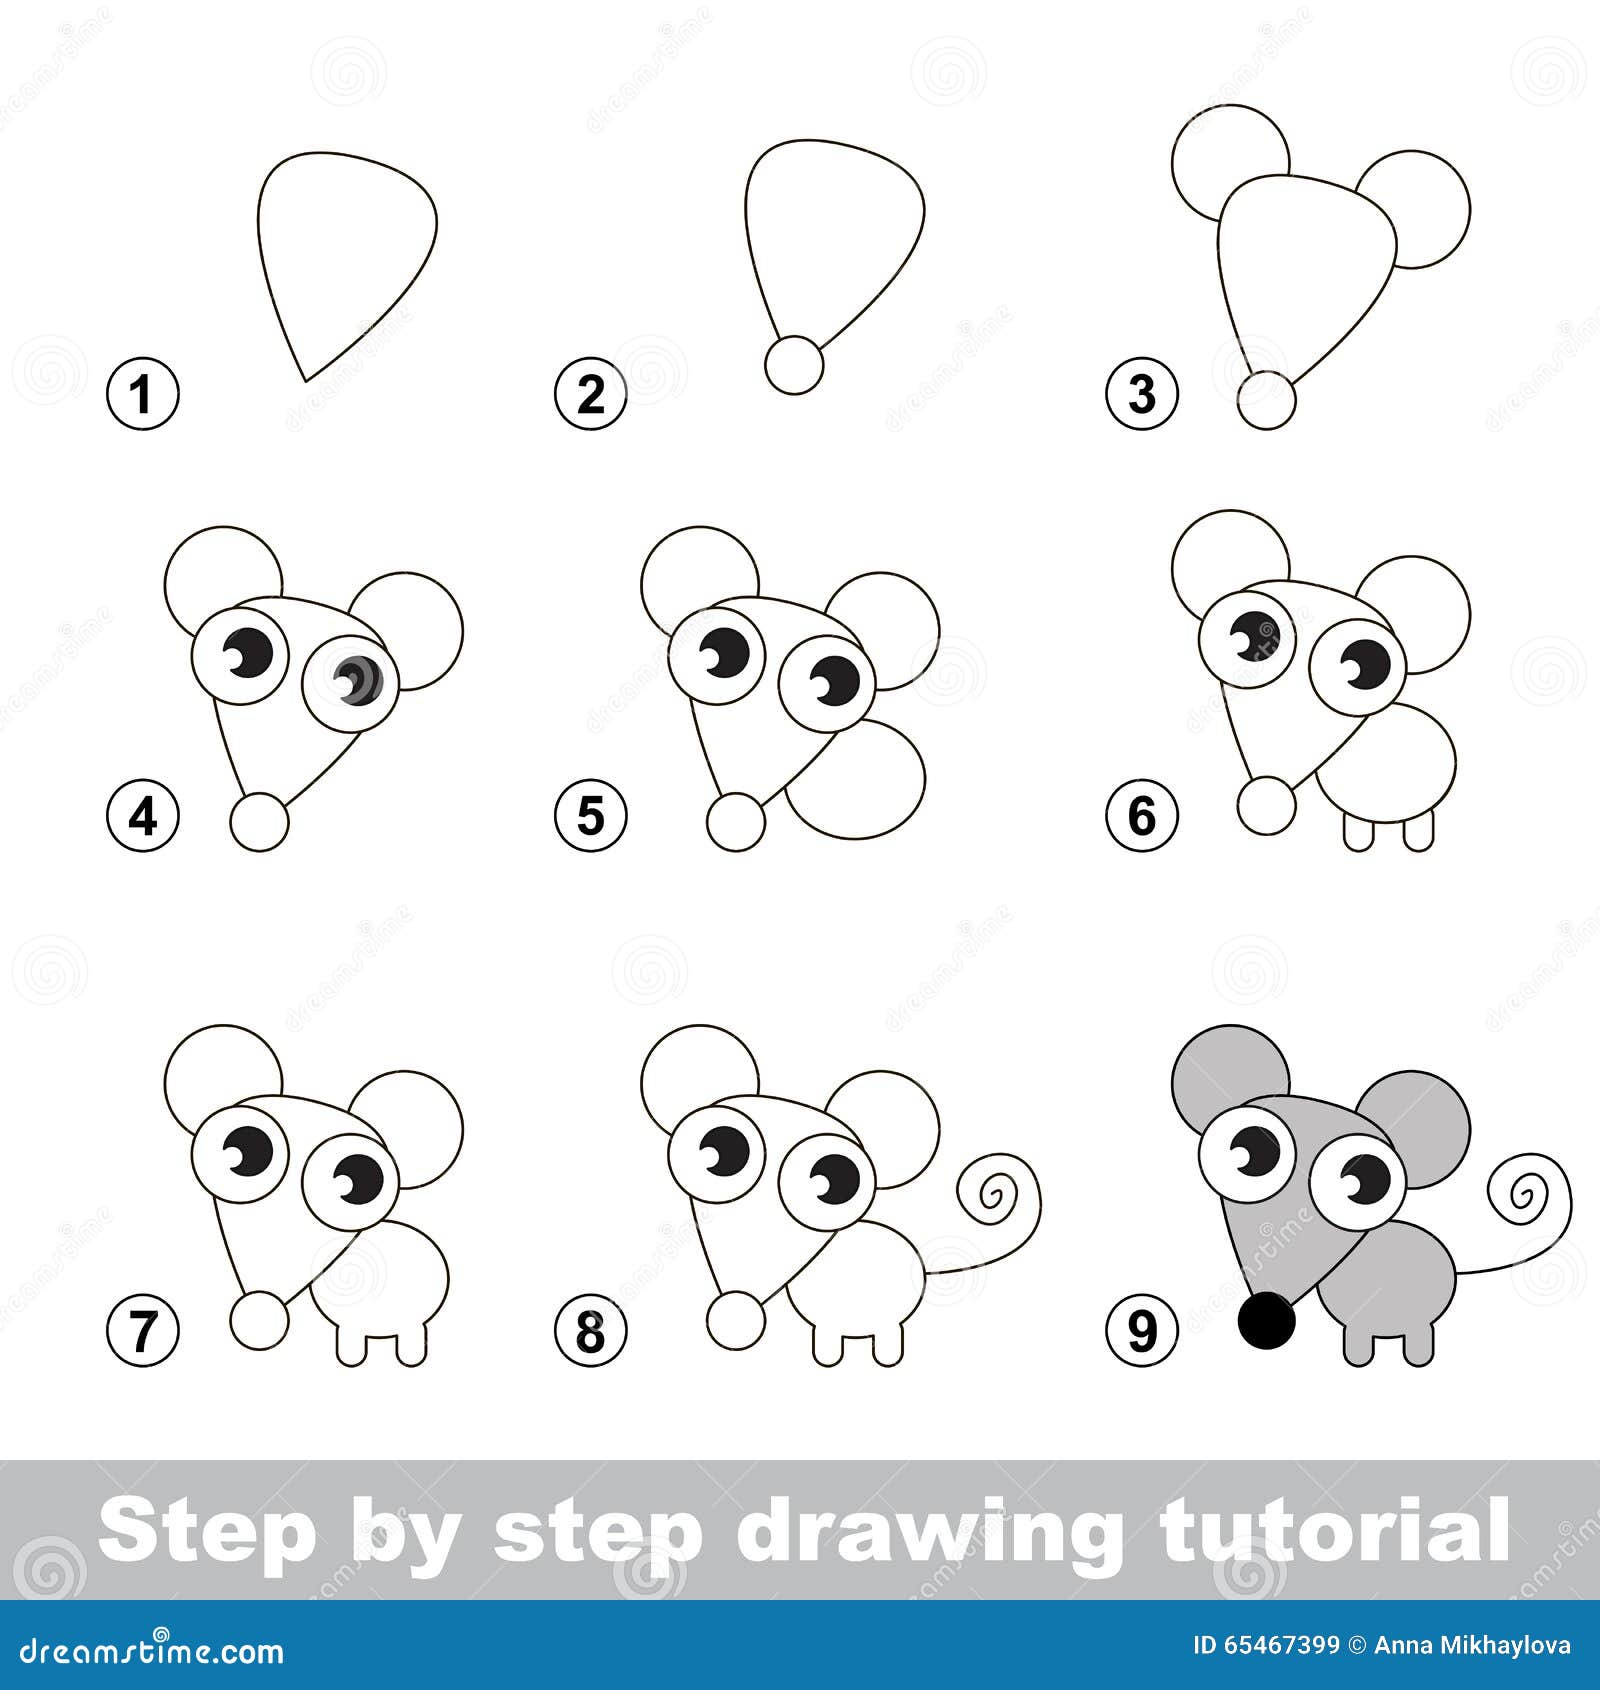 Tuto : J'apprend à dessiner une souris (facile) – Ideedactivite.com